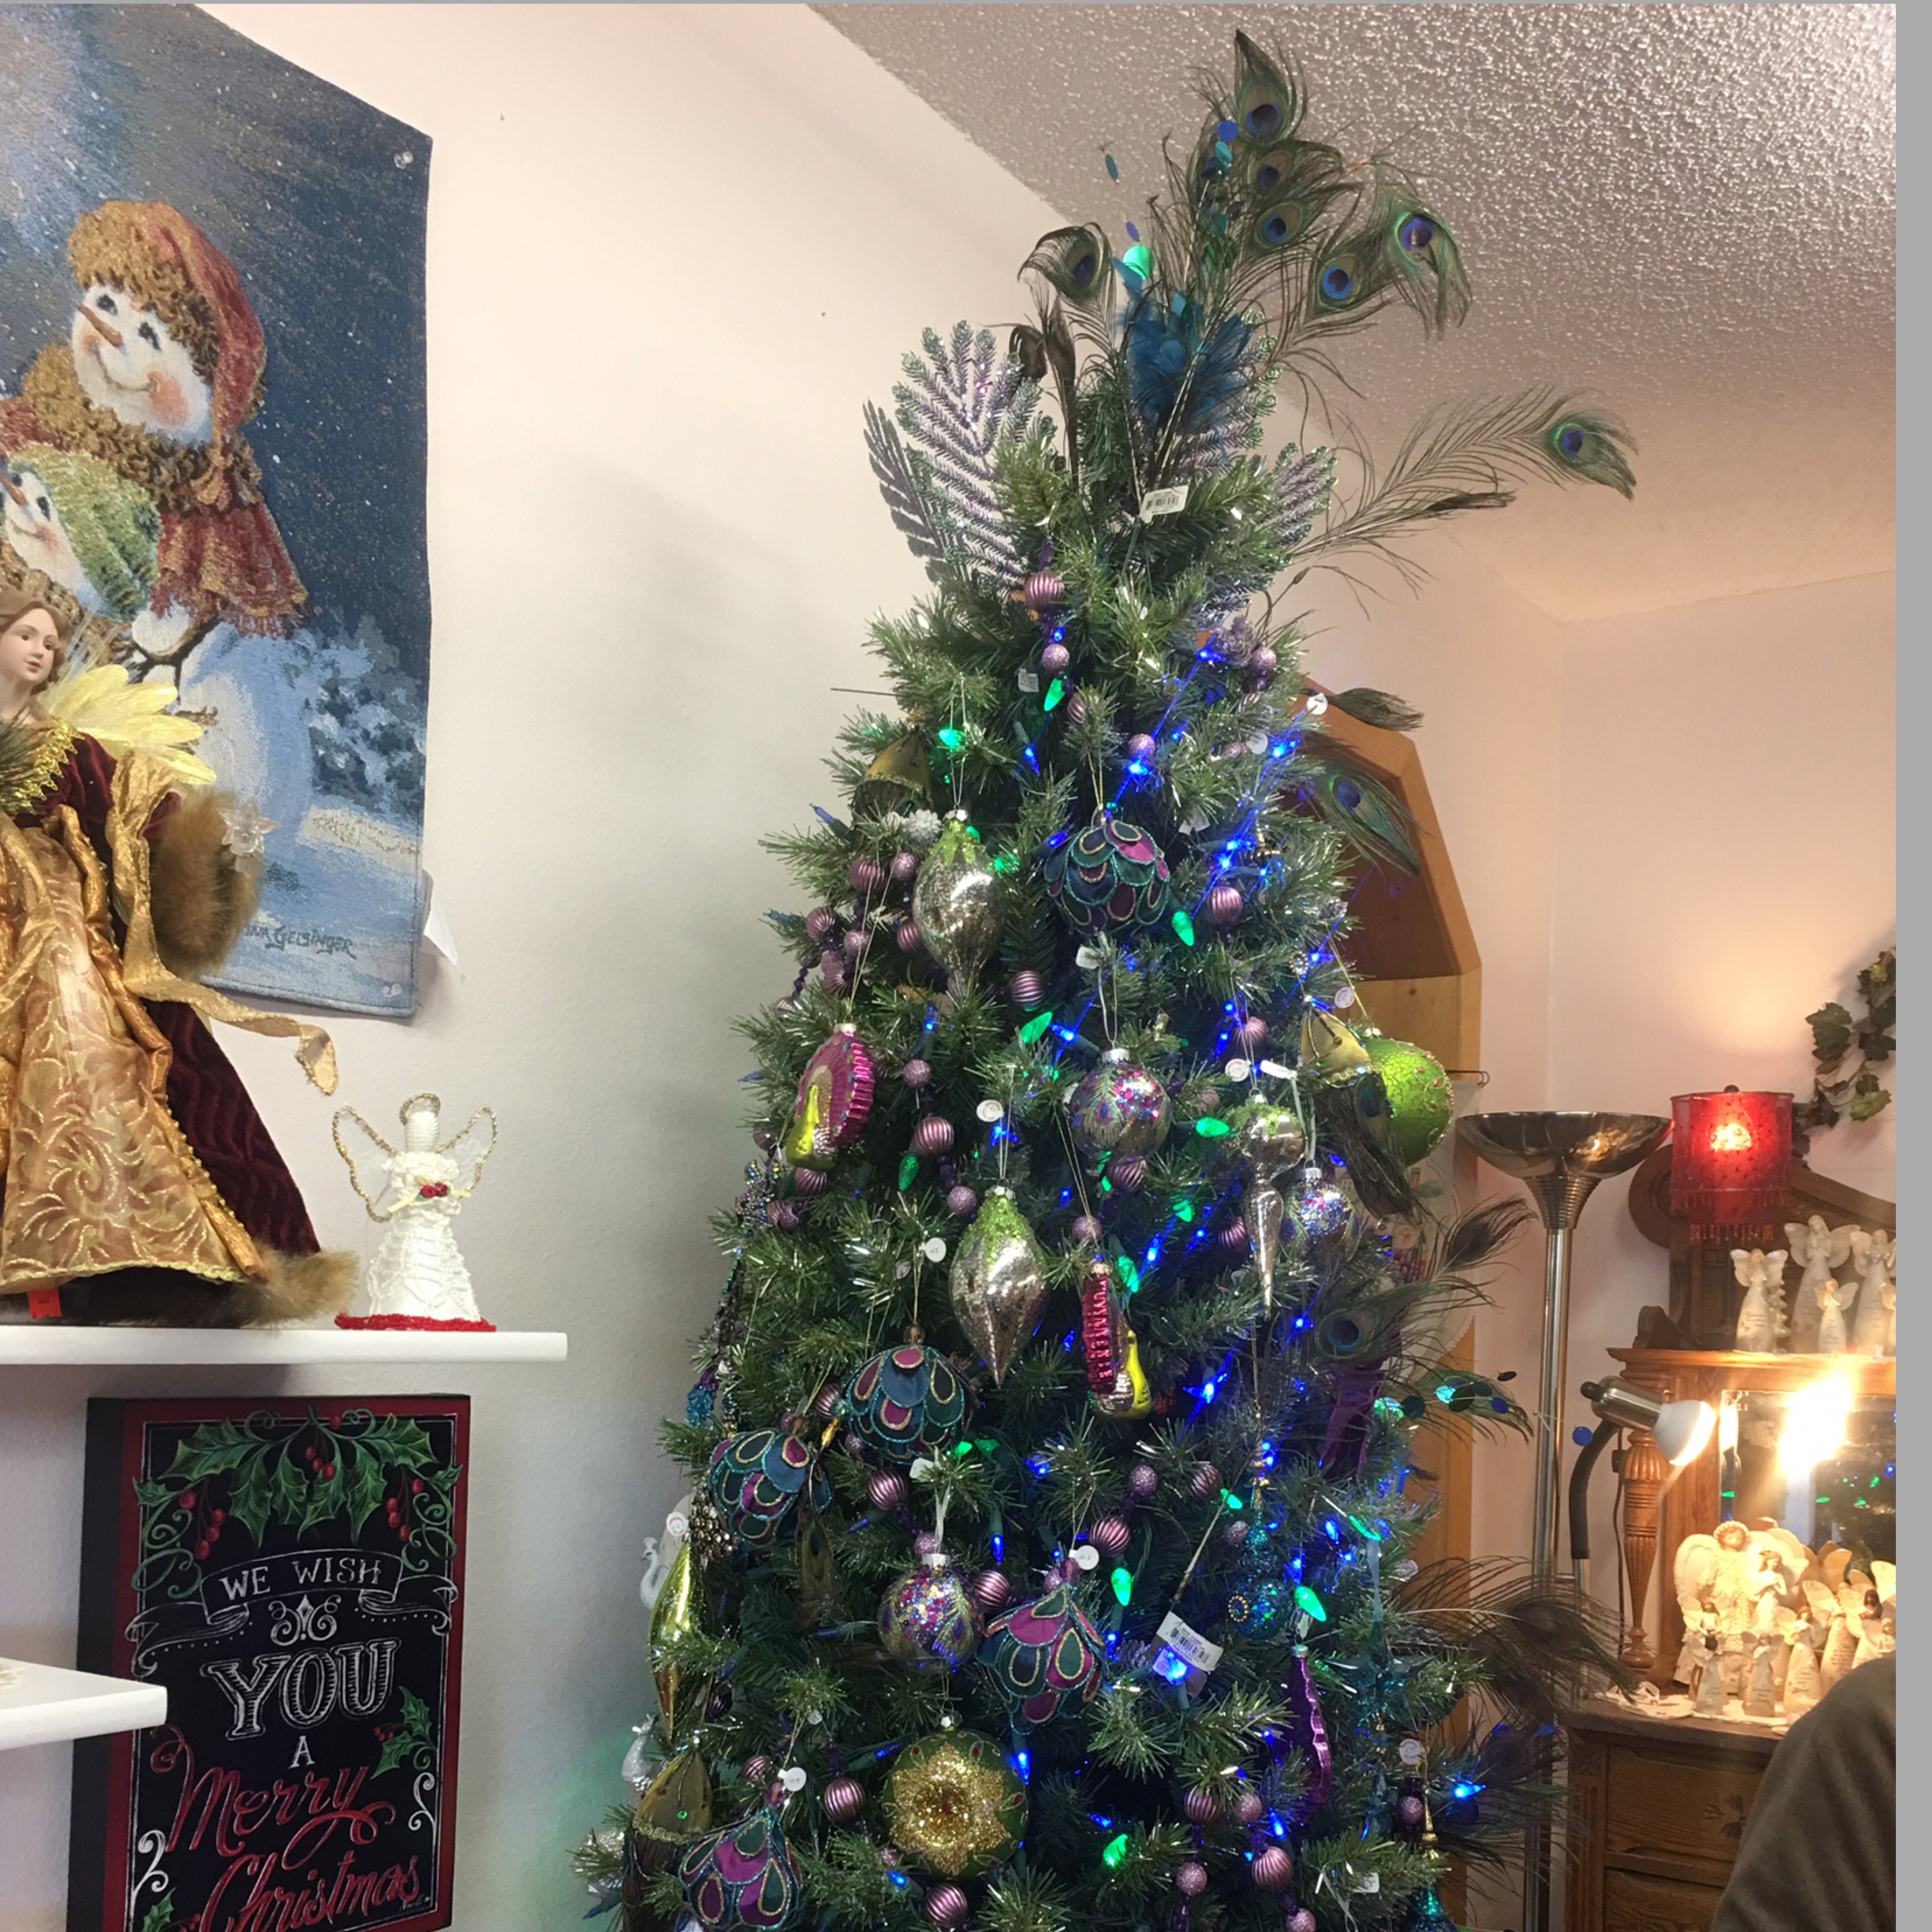 Peacock Themed Christmas Tree at Christmas Village